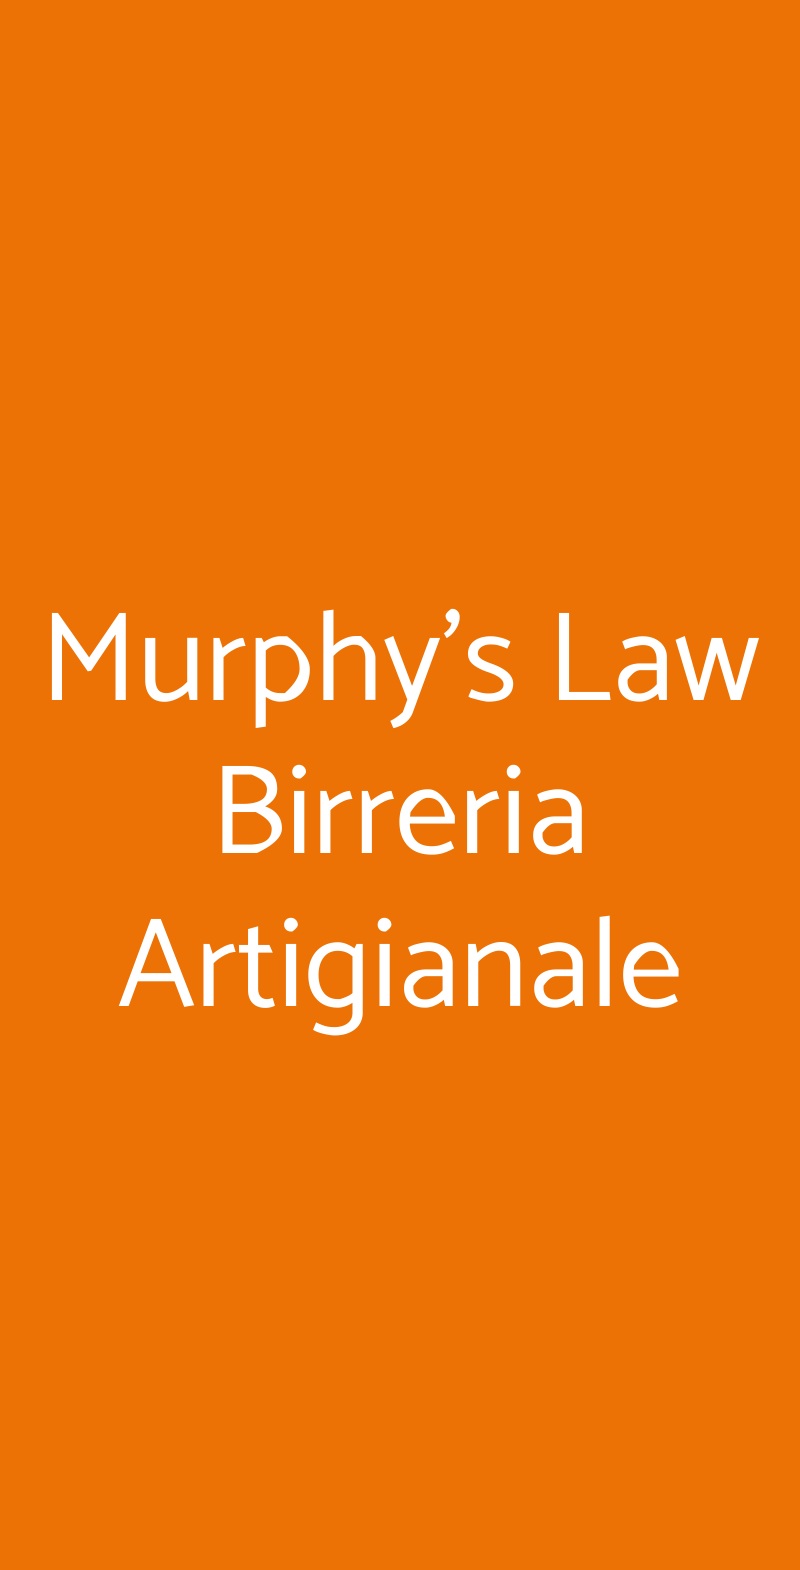 Murphy's Law Birreria Artigianale Napoli menù 1 pagina